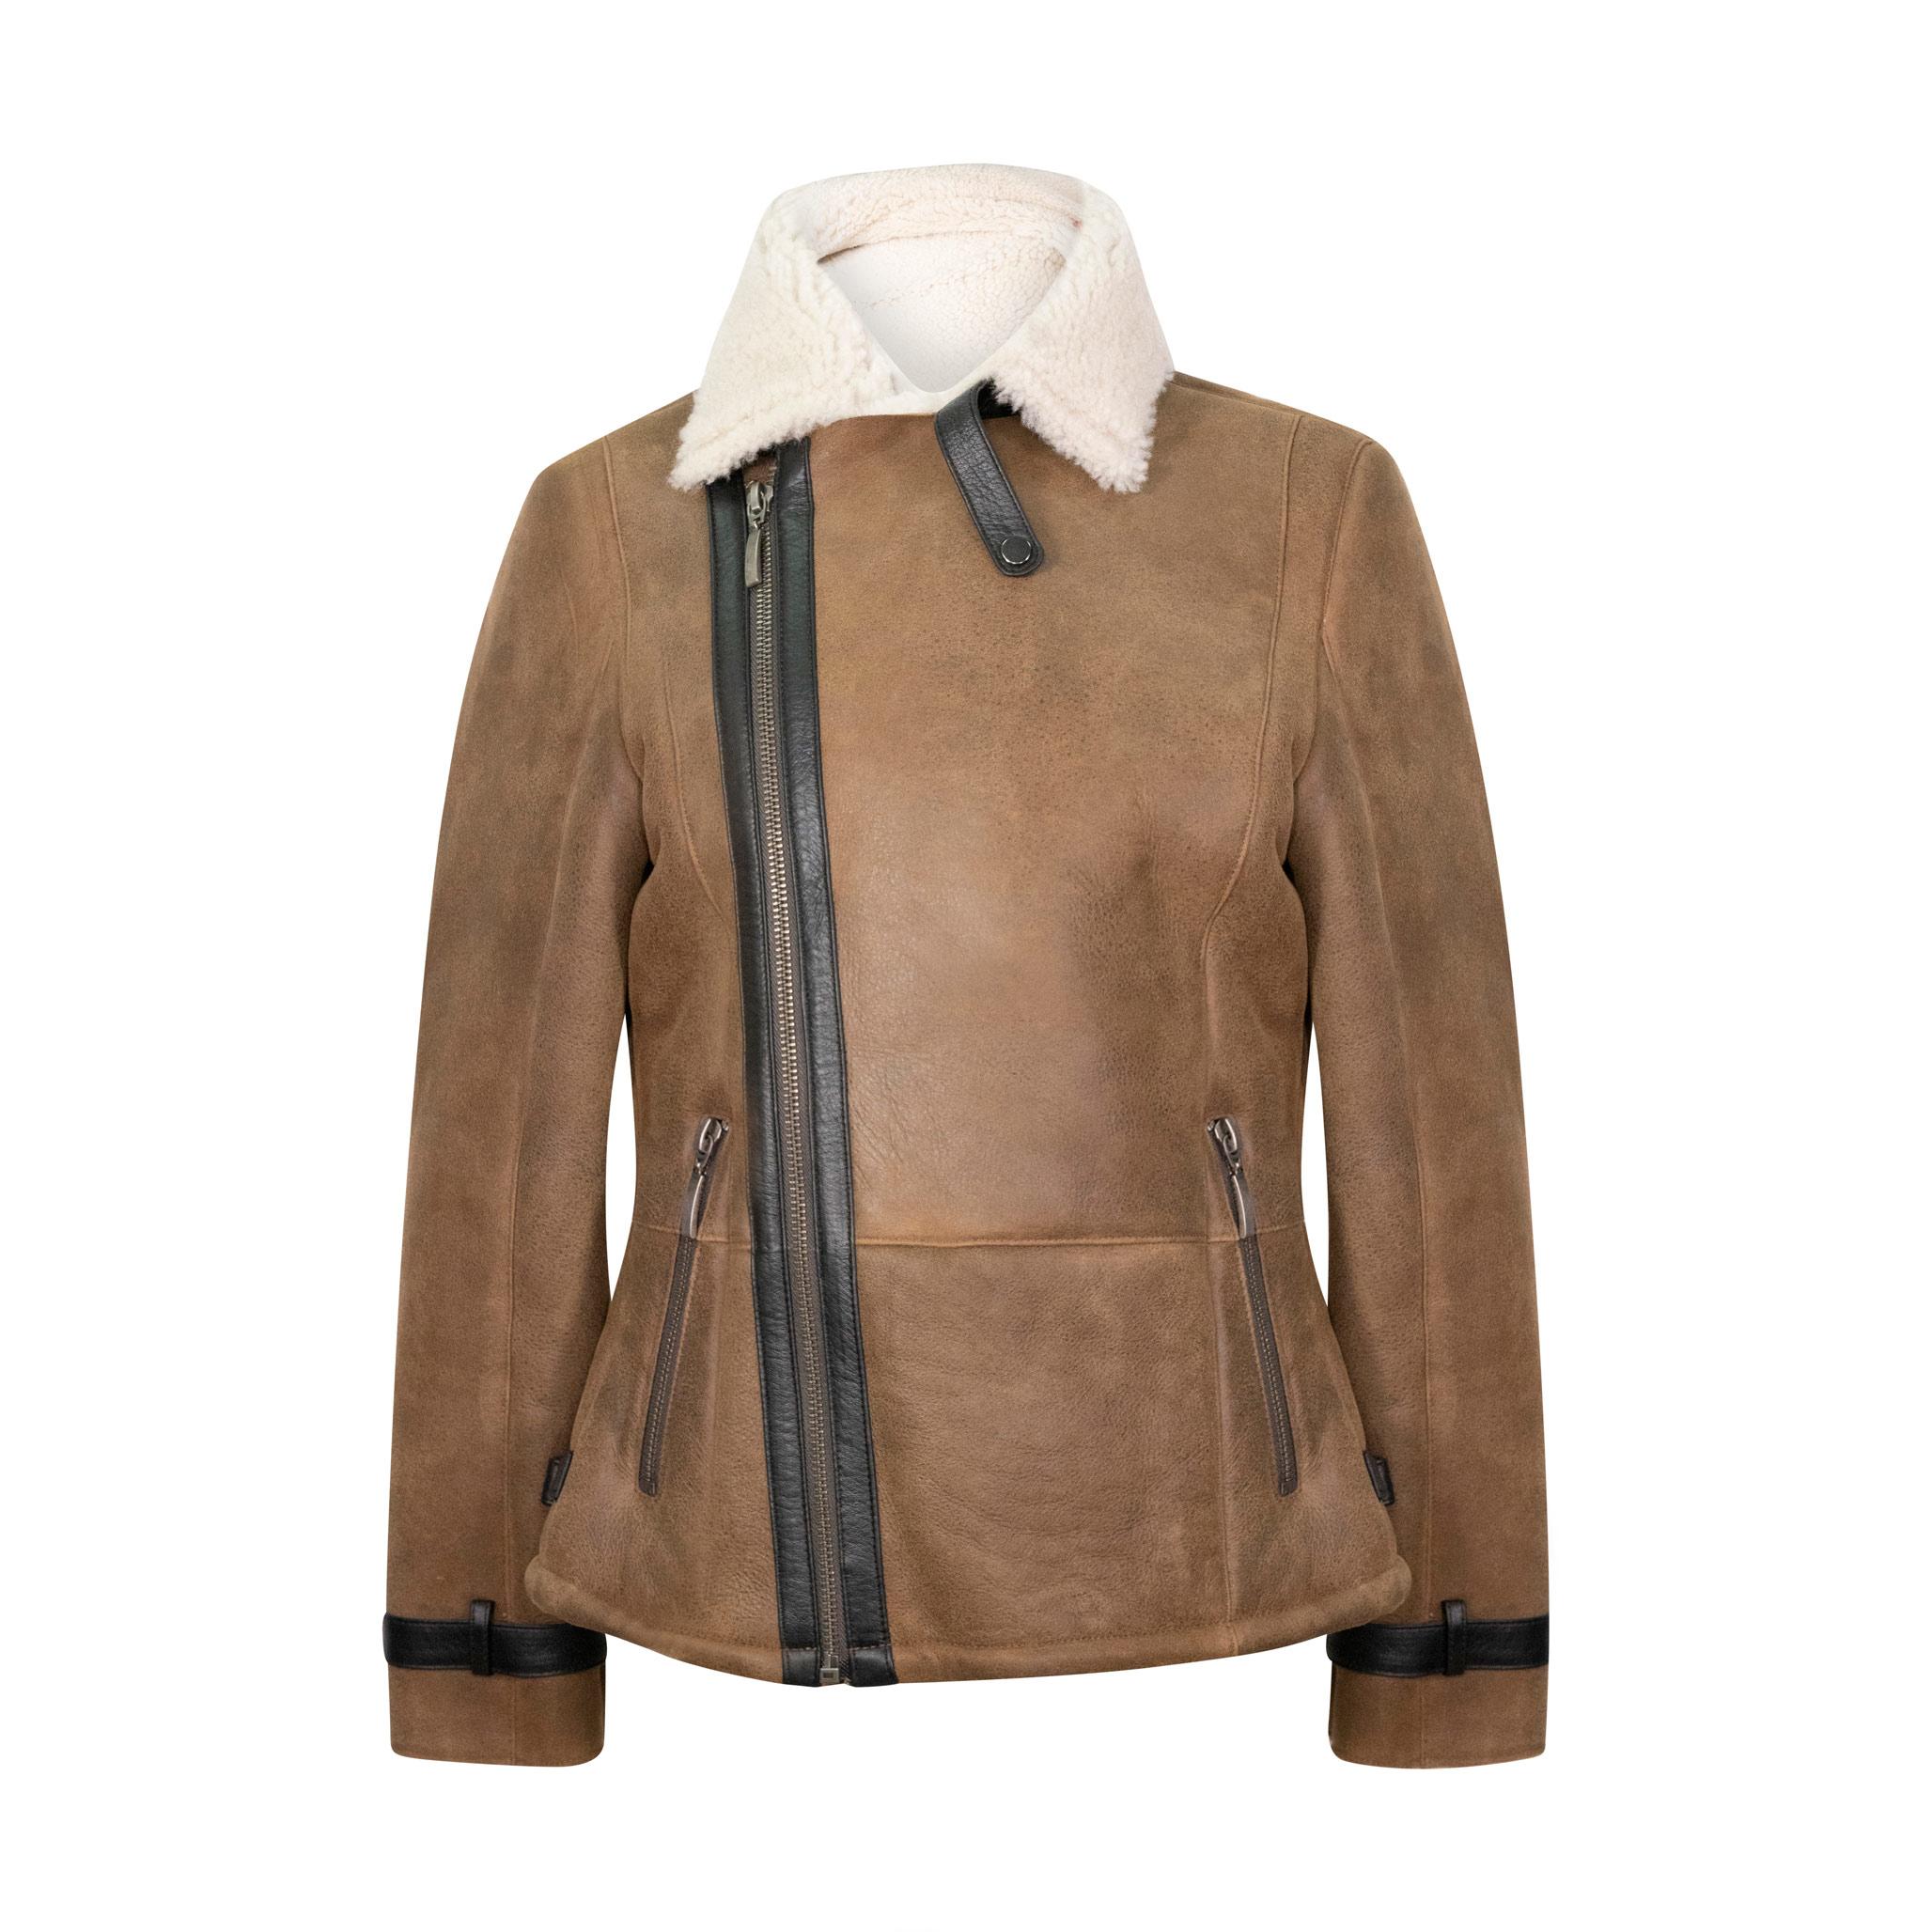 A sleek, luxurious sheepskin biker jacket in tan with cream fur.